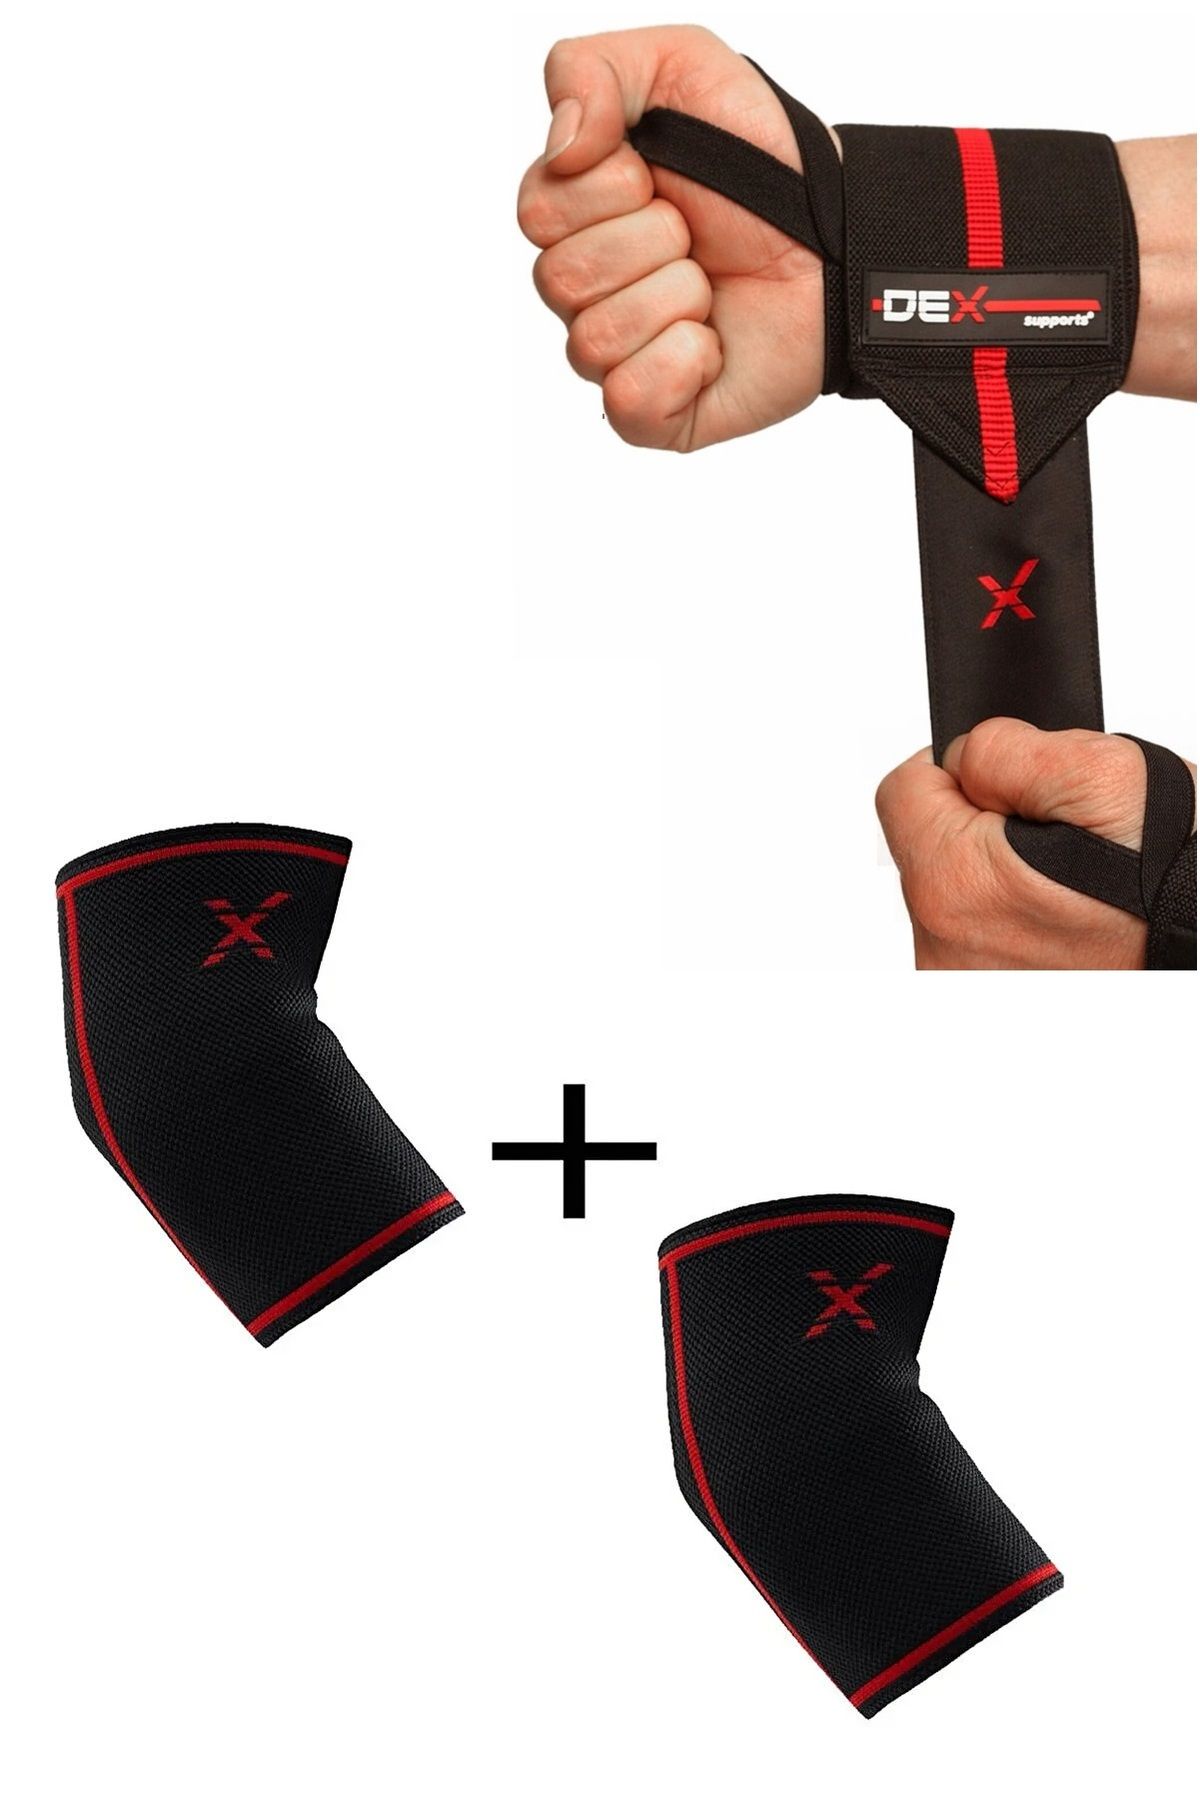 Dex Supports Lasting Energy Sporcu Bilekliği Elite Wrist Wraps+Elbow Sleeve Fitness Ortopedik Antrenman Dirsekliği 2'li Paket